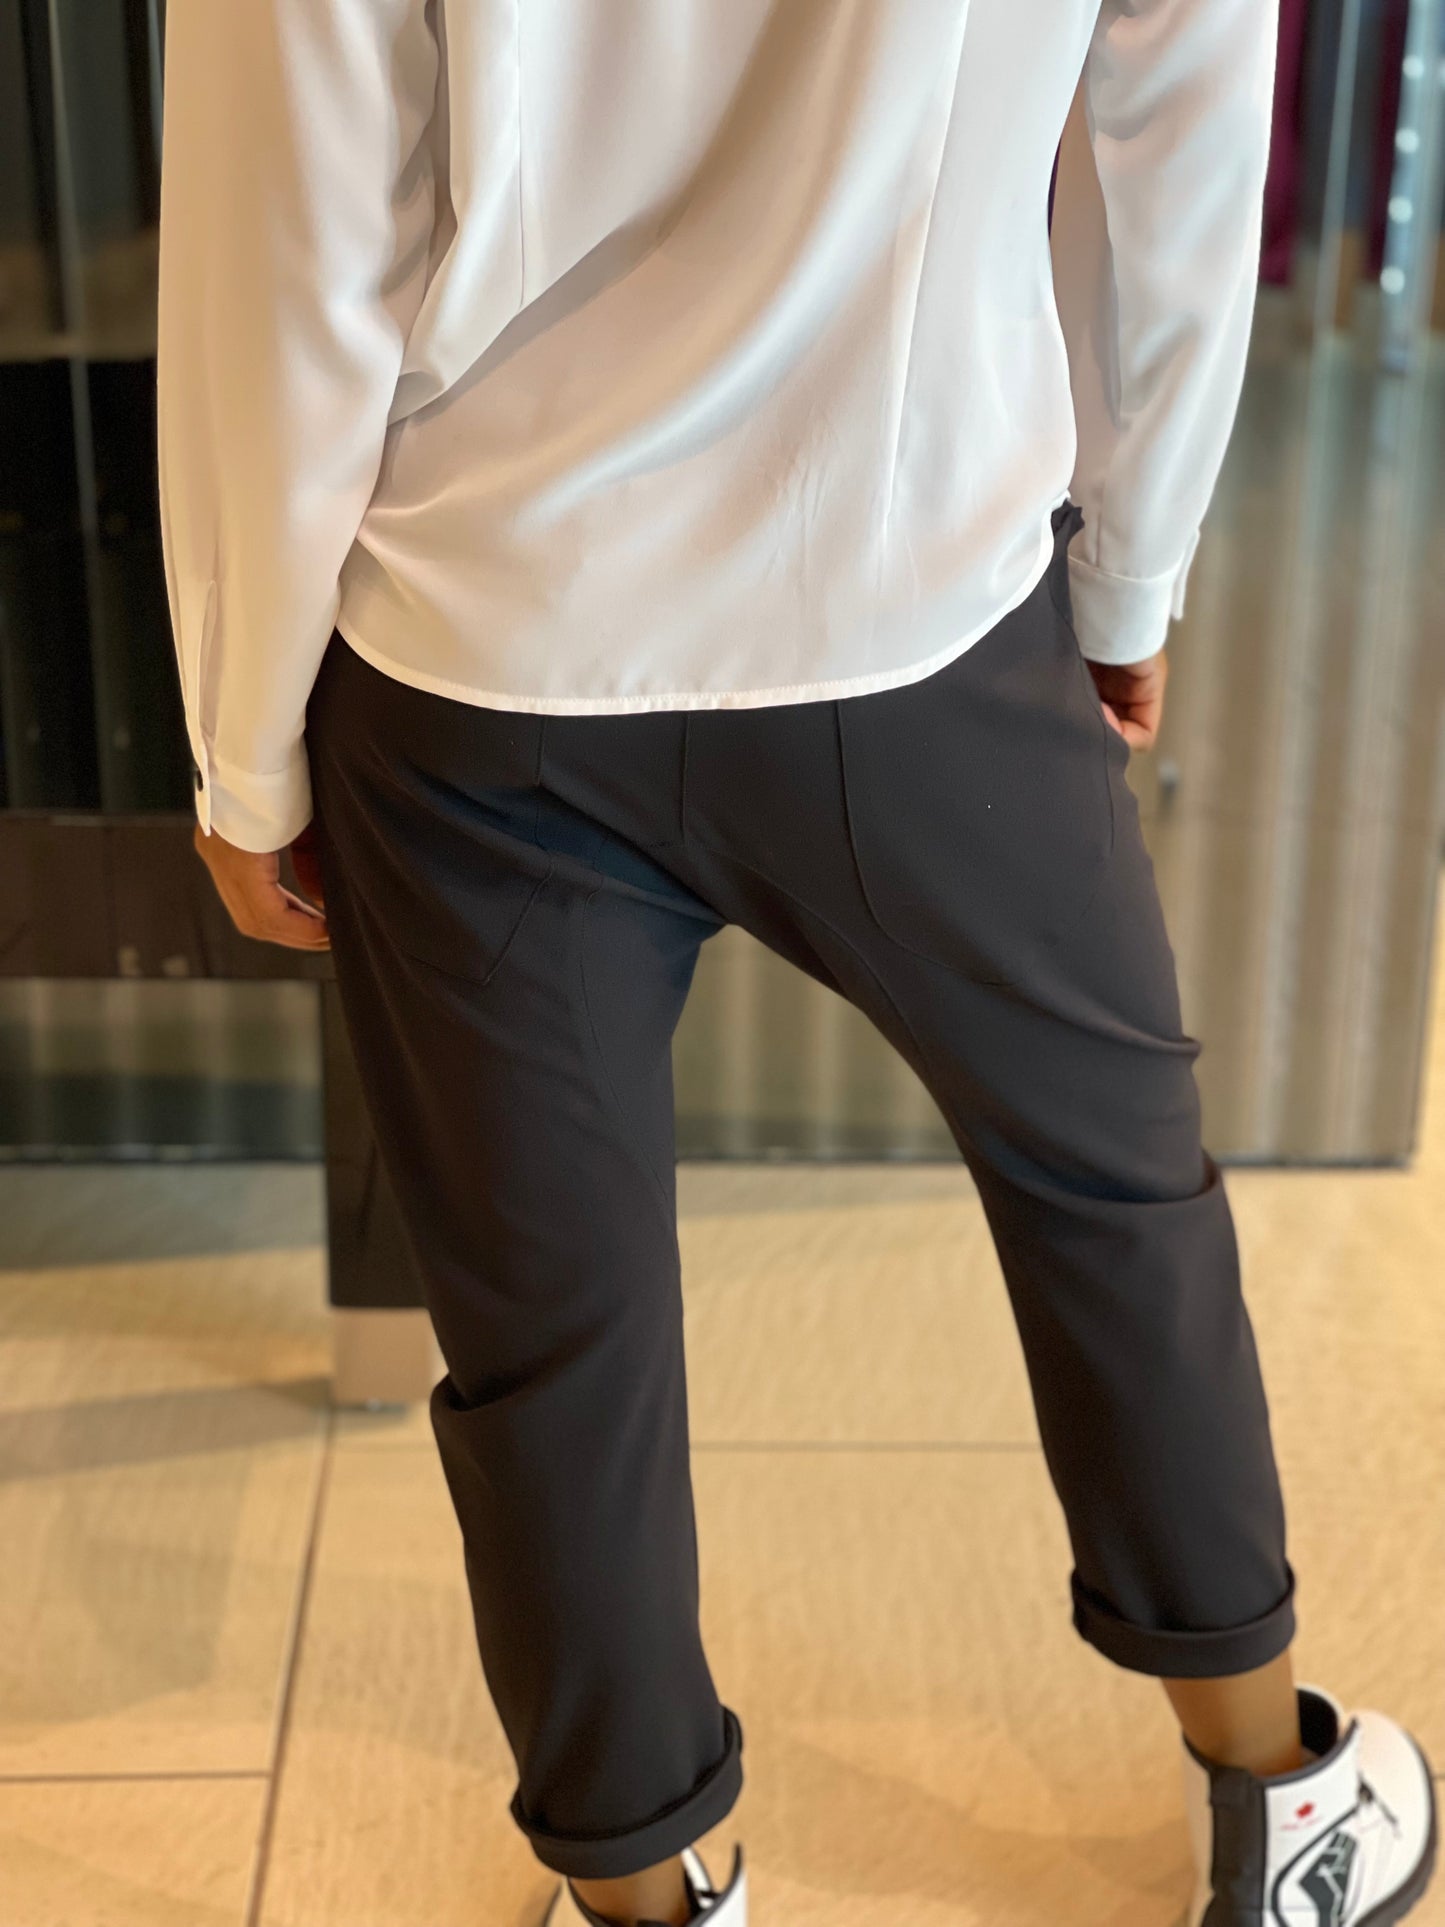 Drop-Crotch Jodhpurs Trousers.